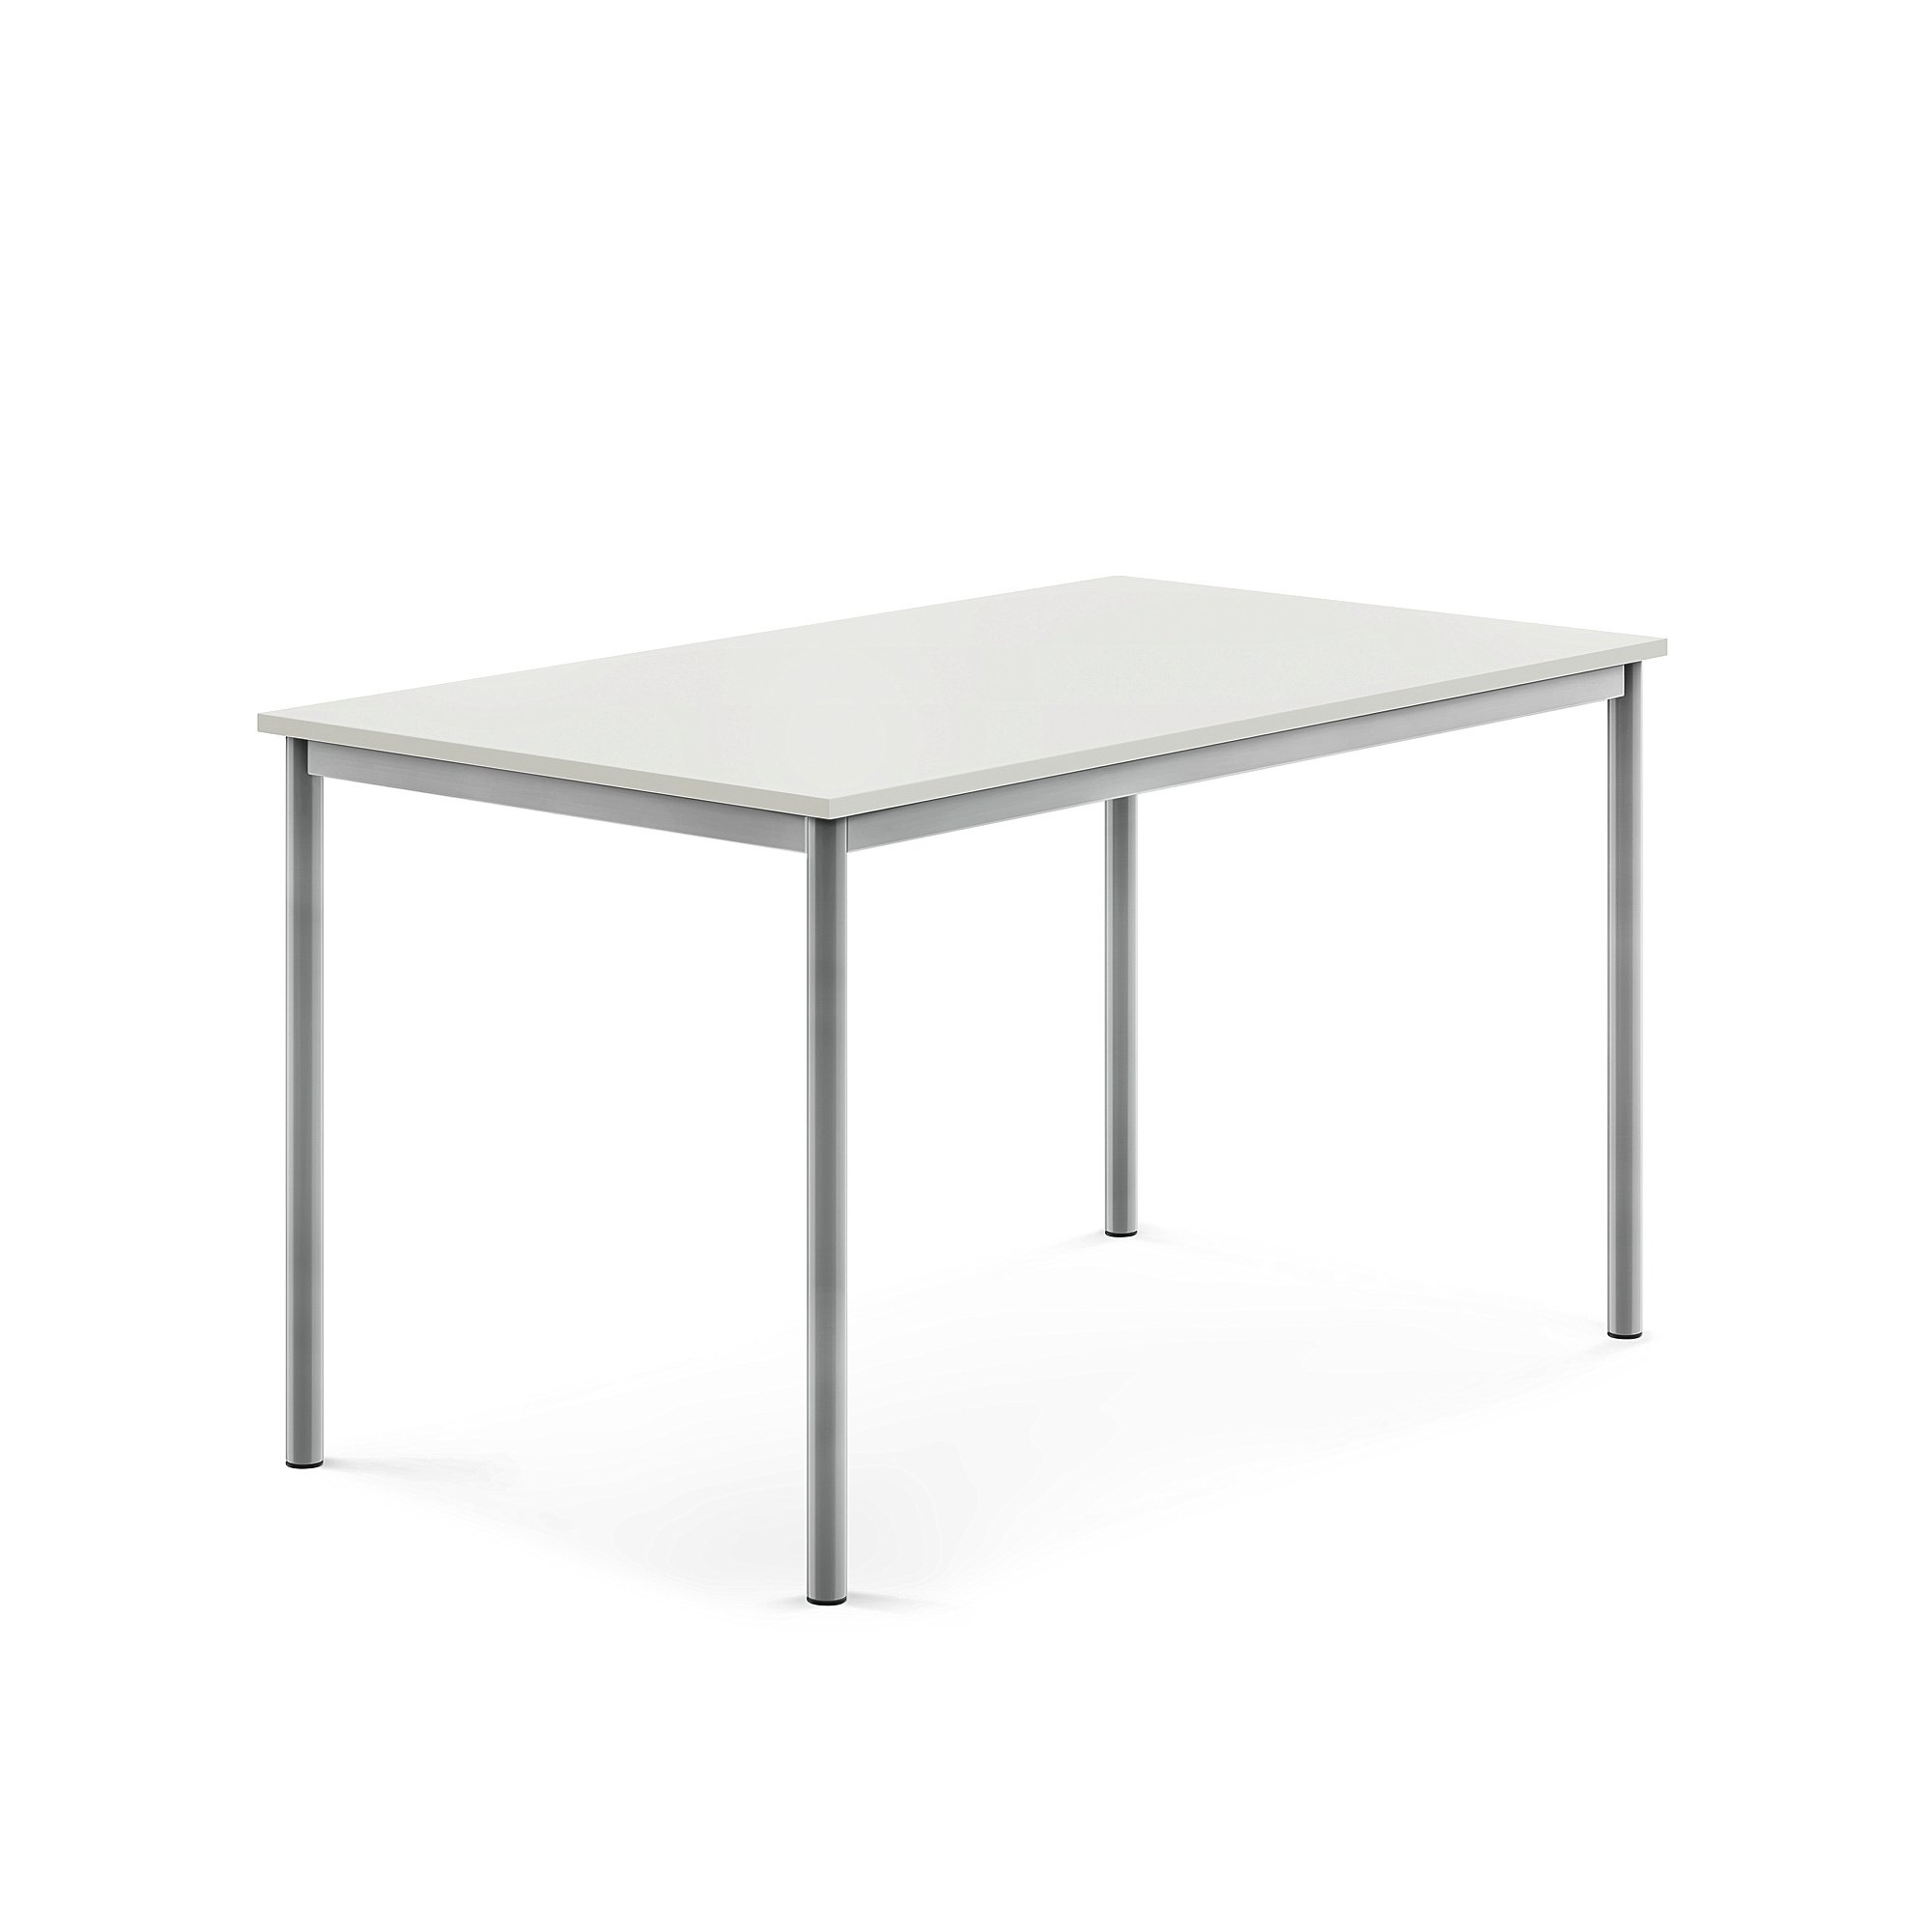 Stůl SONITUS, 1400x800x760 mm, stříbrné nohy, HPL deska tlumící hluk, šedá